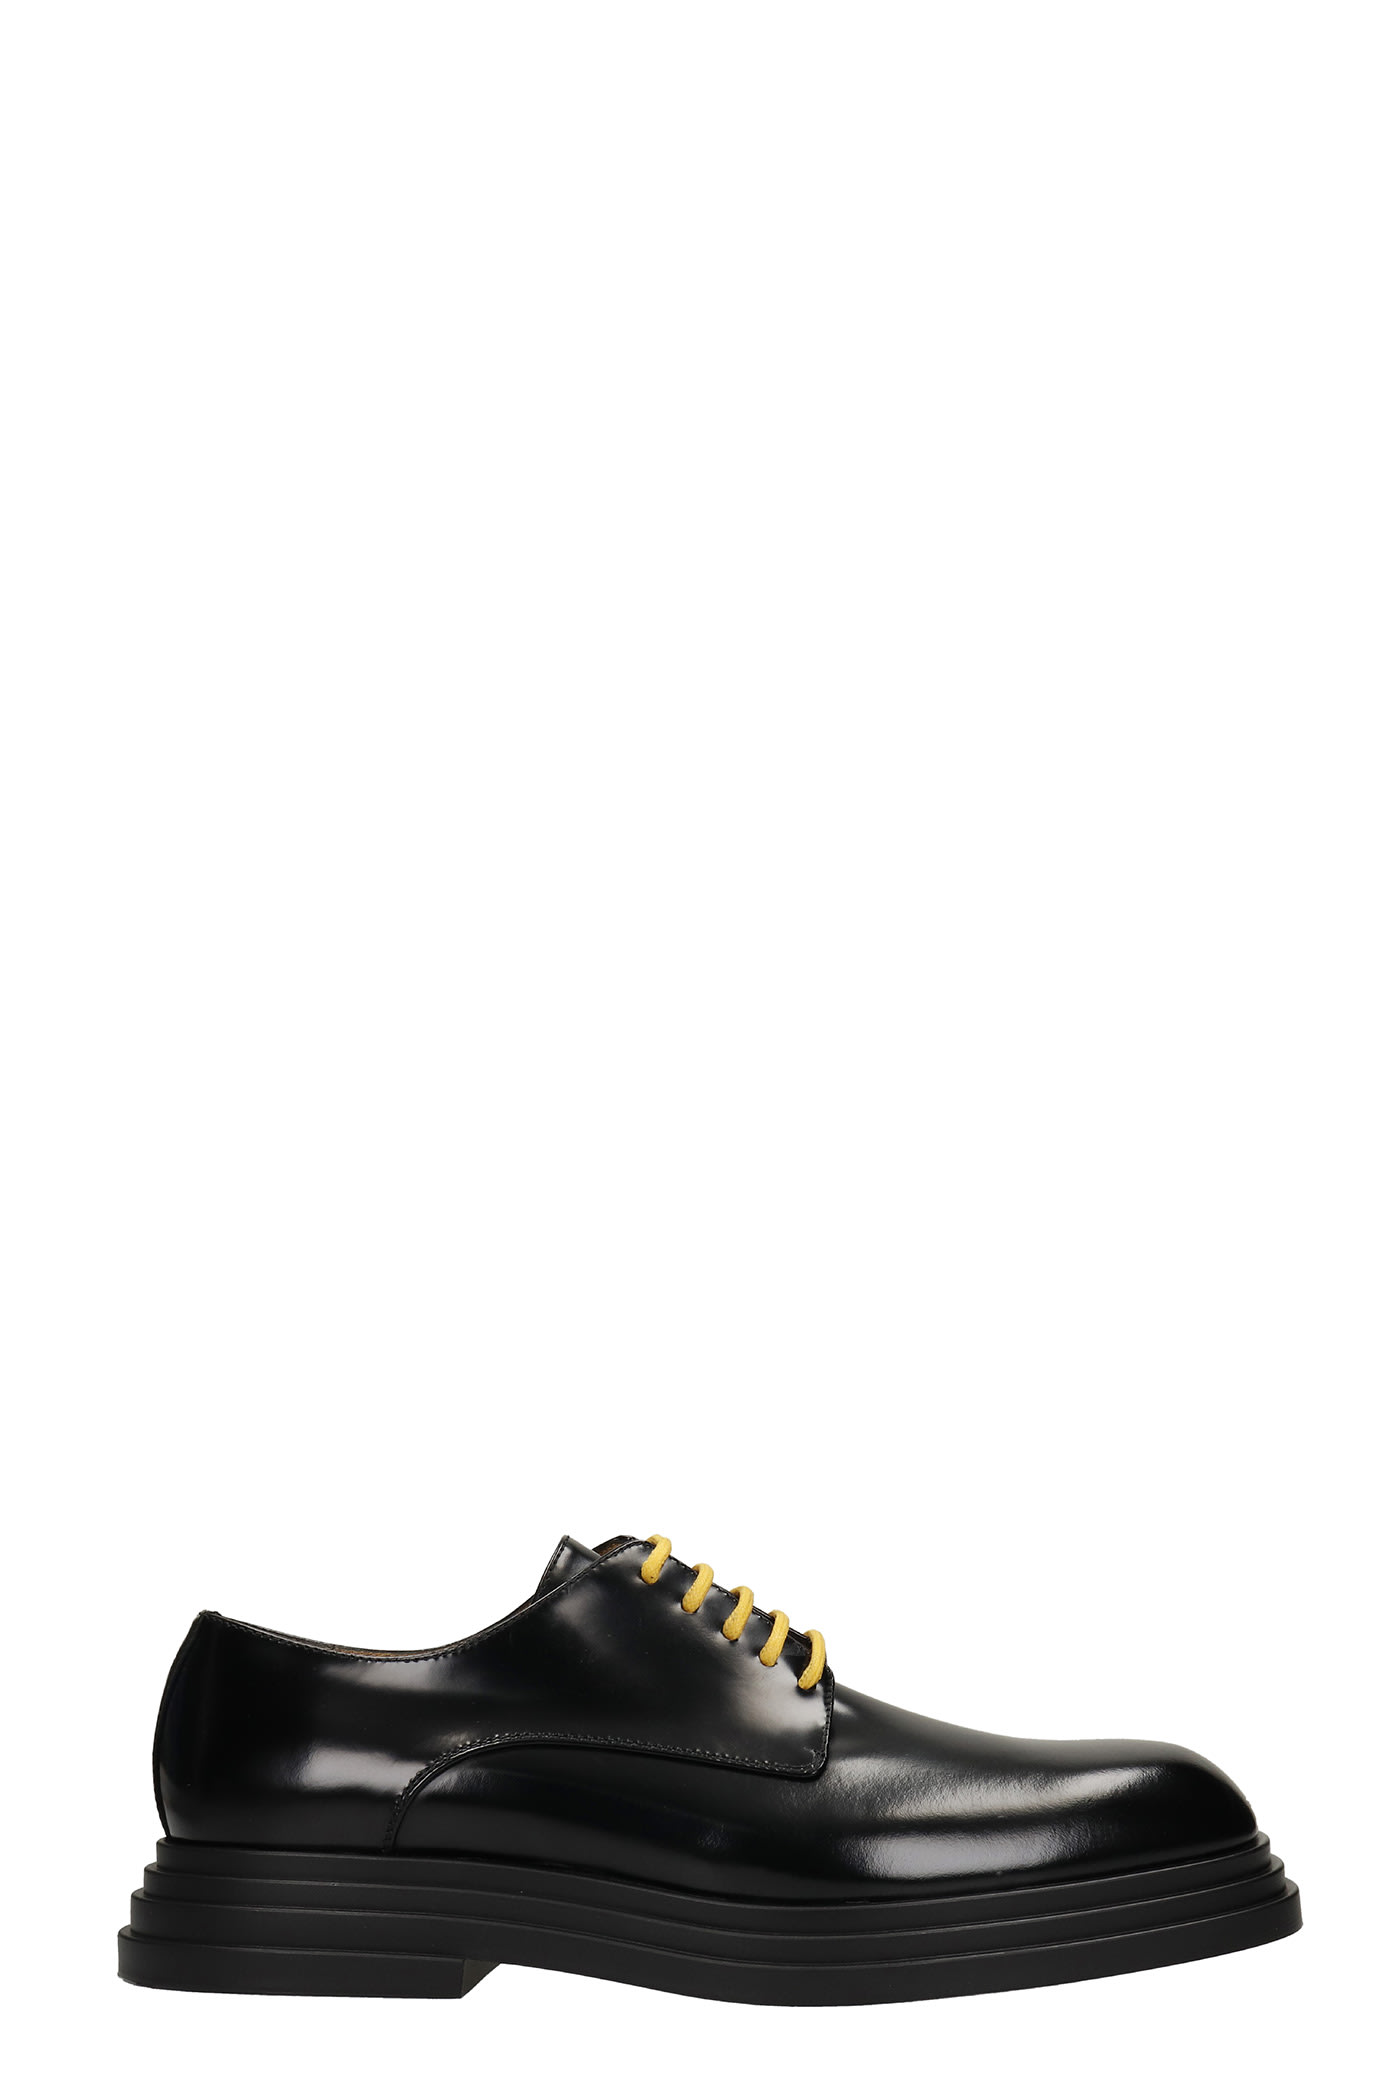 Cesare Paciotti Stringate Lace Up Shoes In Black Leather